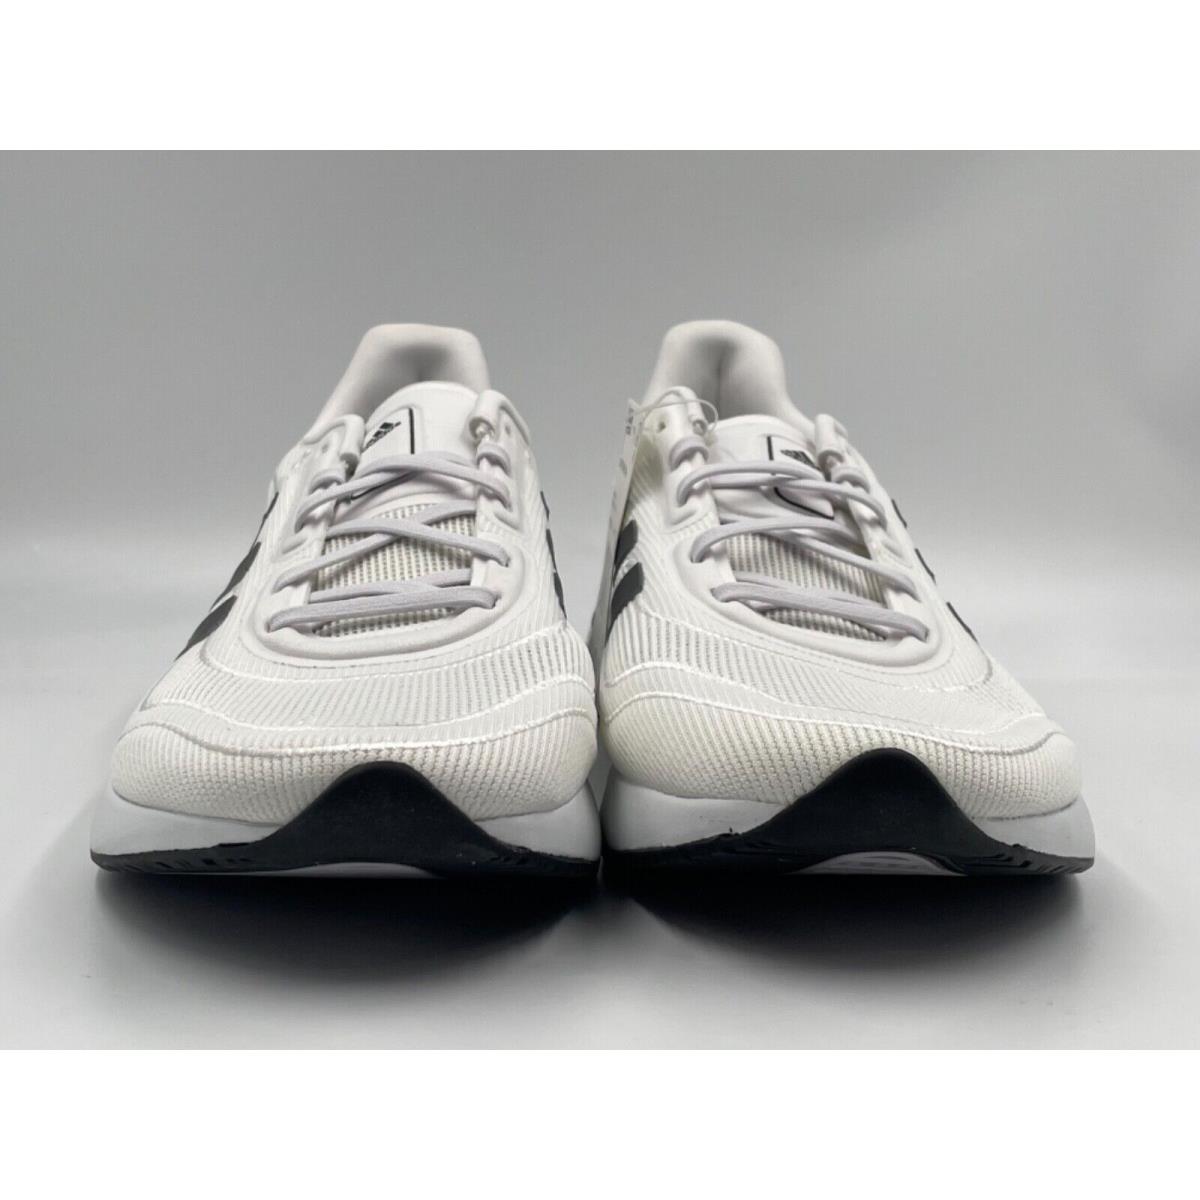 Adidas shoes Supernova - White Black Gray 2